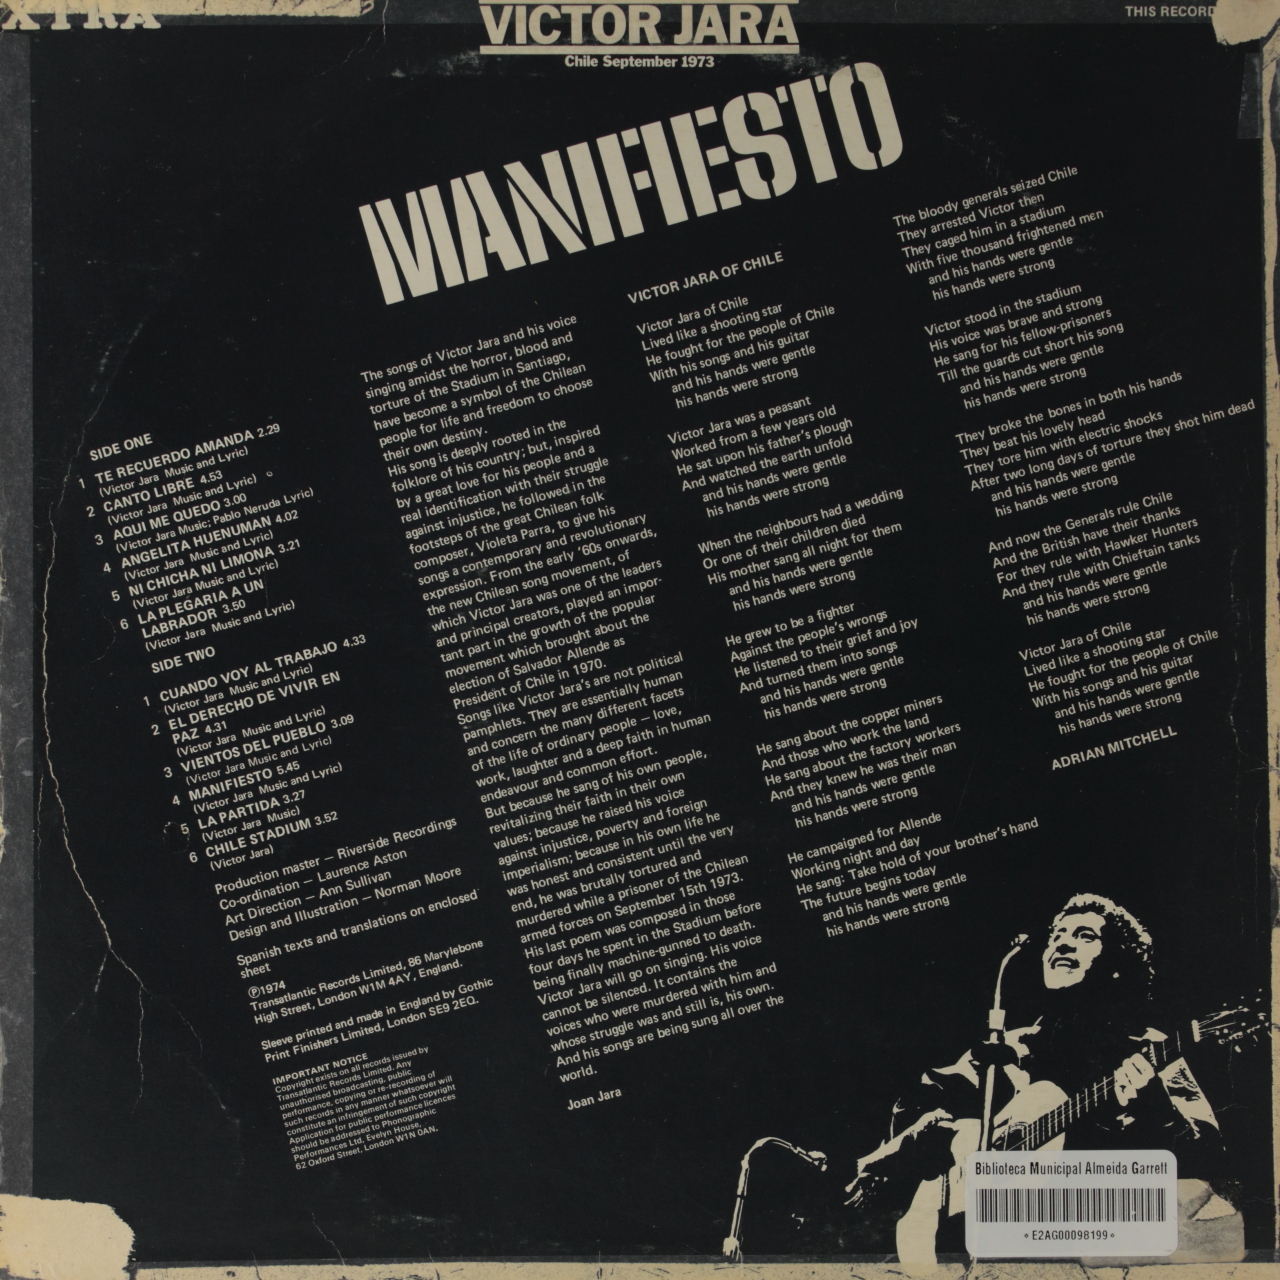 Manifiesto - Chile Spetember 1973